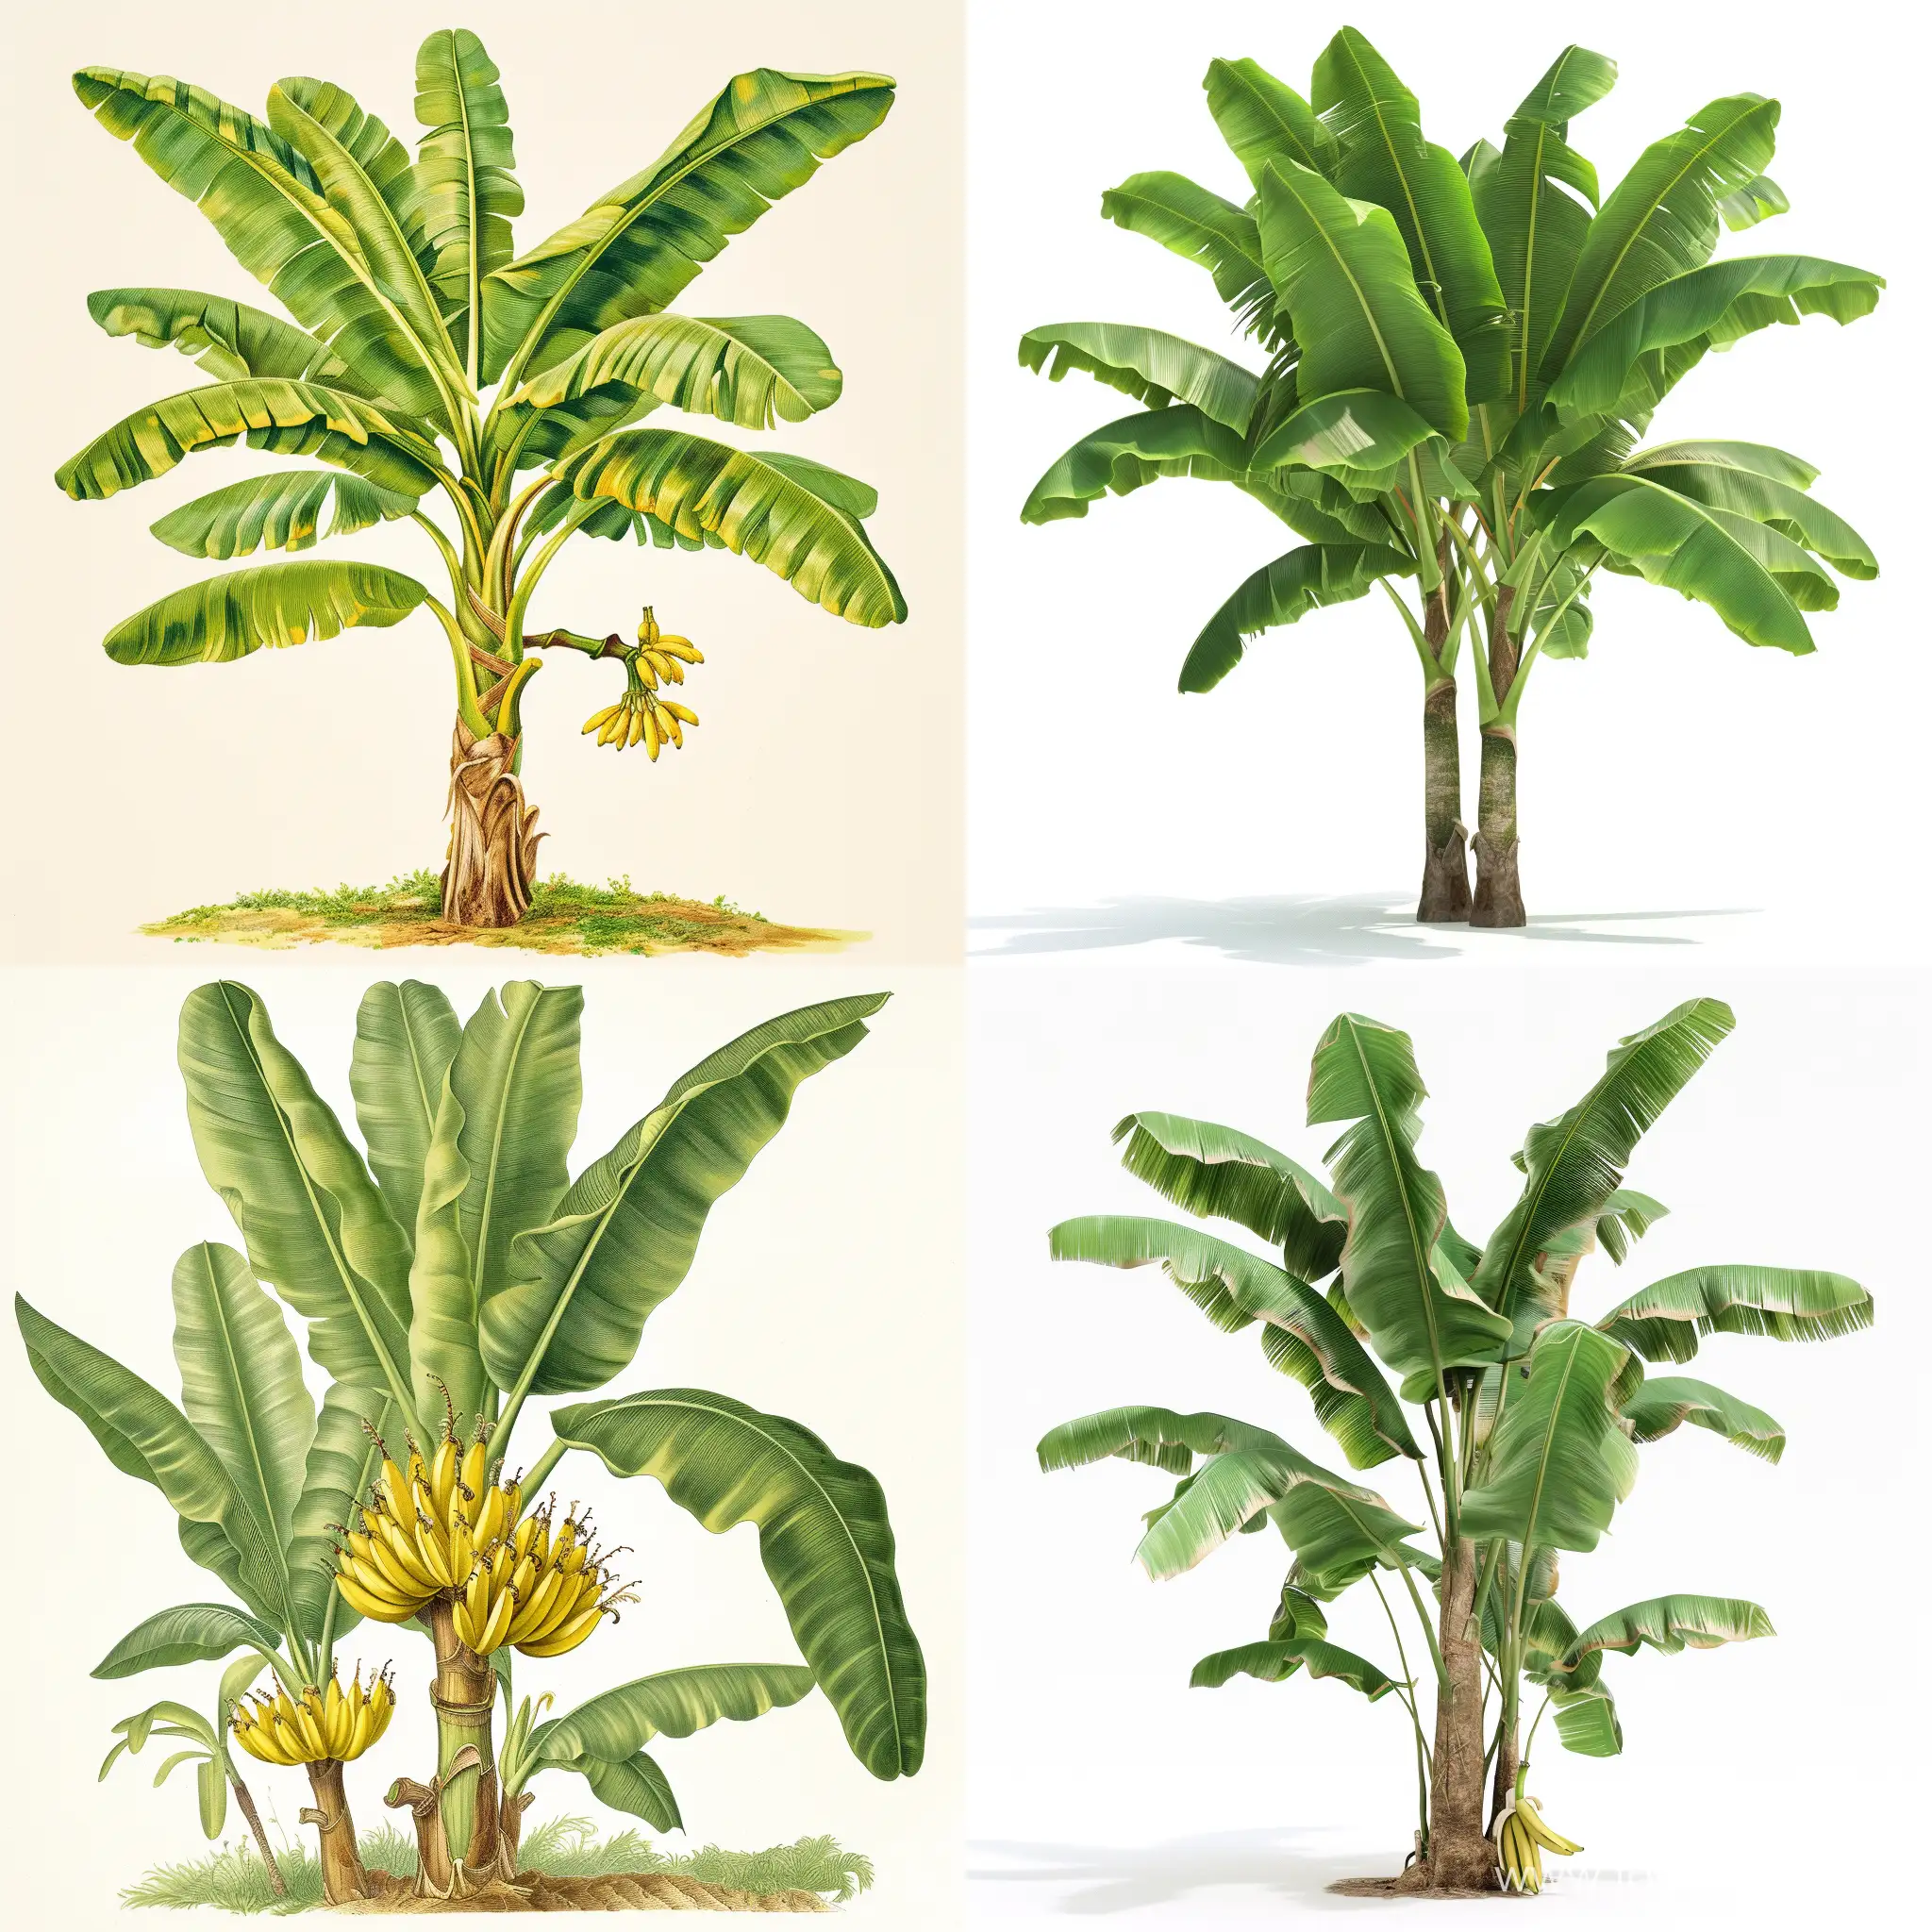 Vibrant-Banana-Tree-Musa-with-Lush-Foliage-Tropical-Botanical-Image